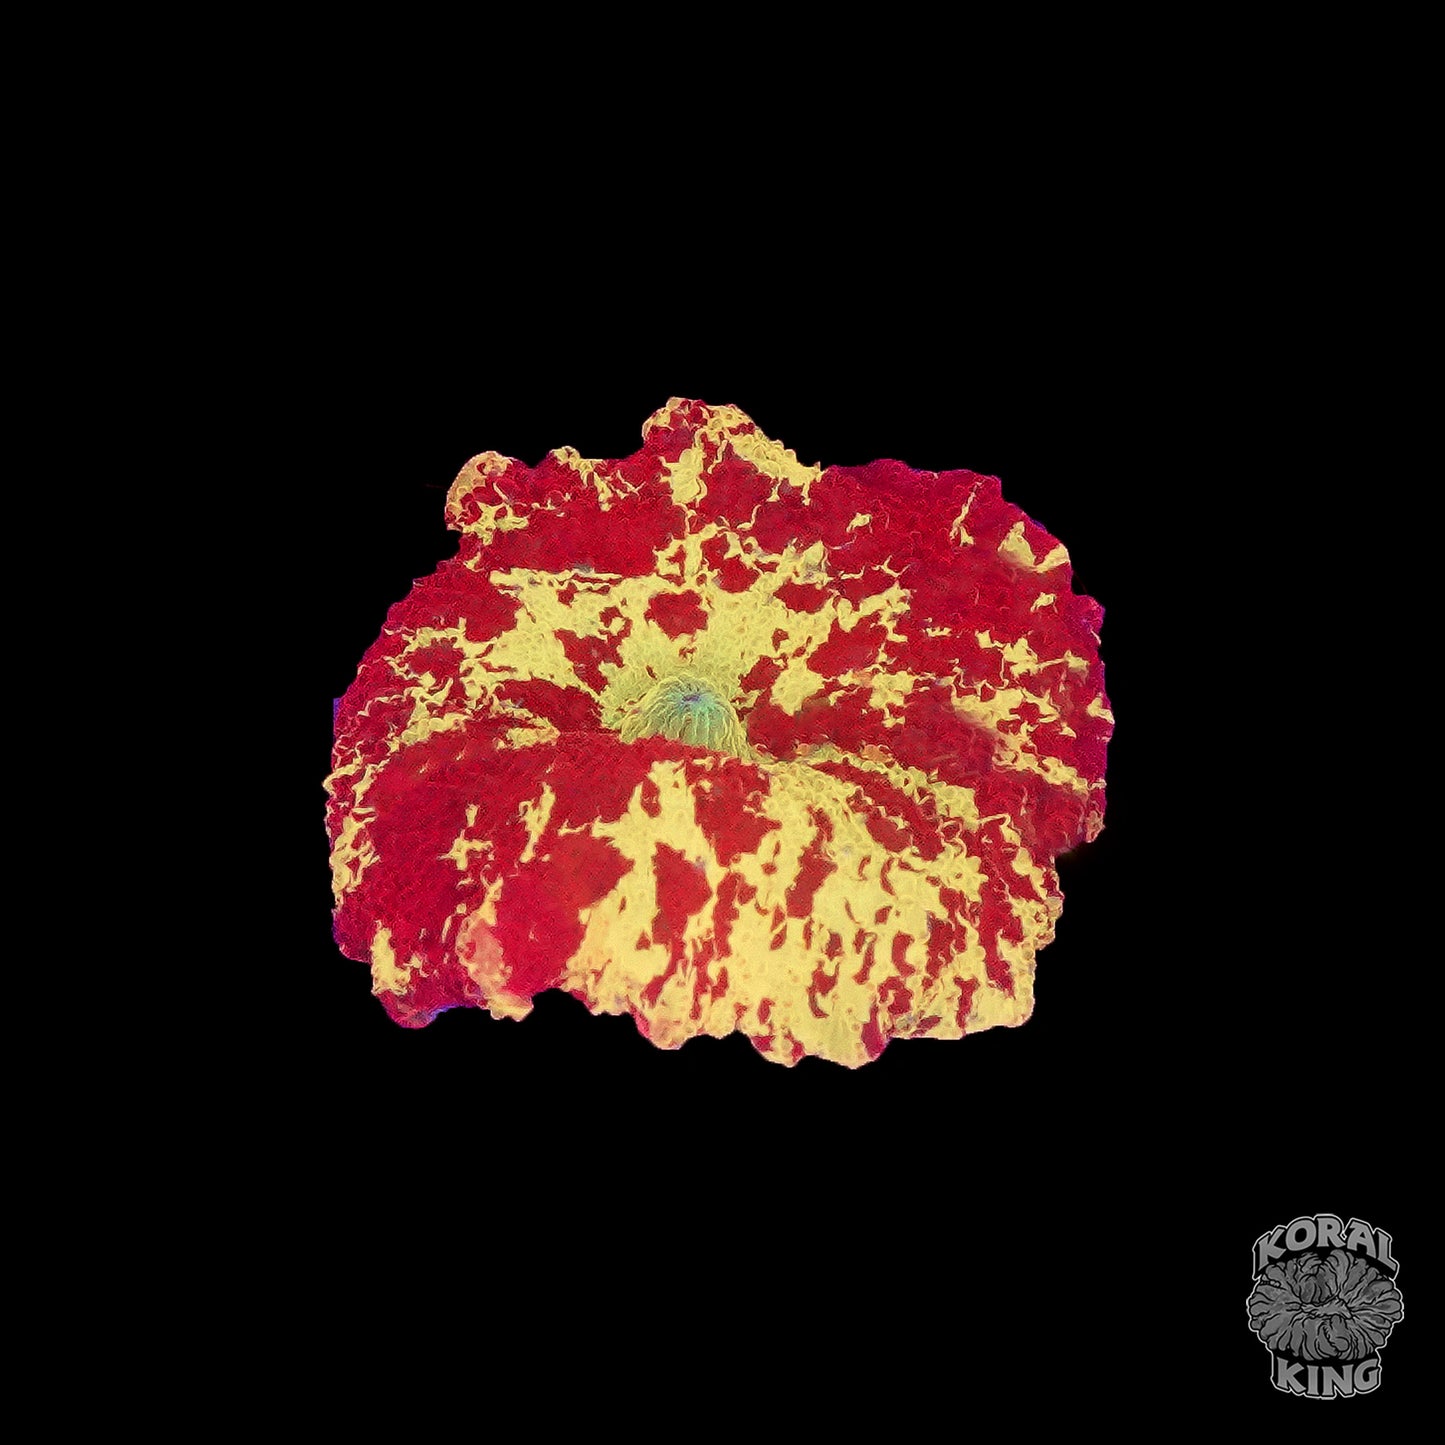 Eclectus Mushroom - Koral King